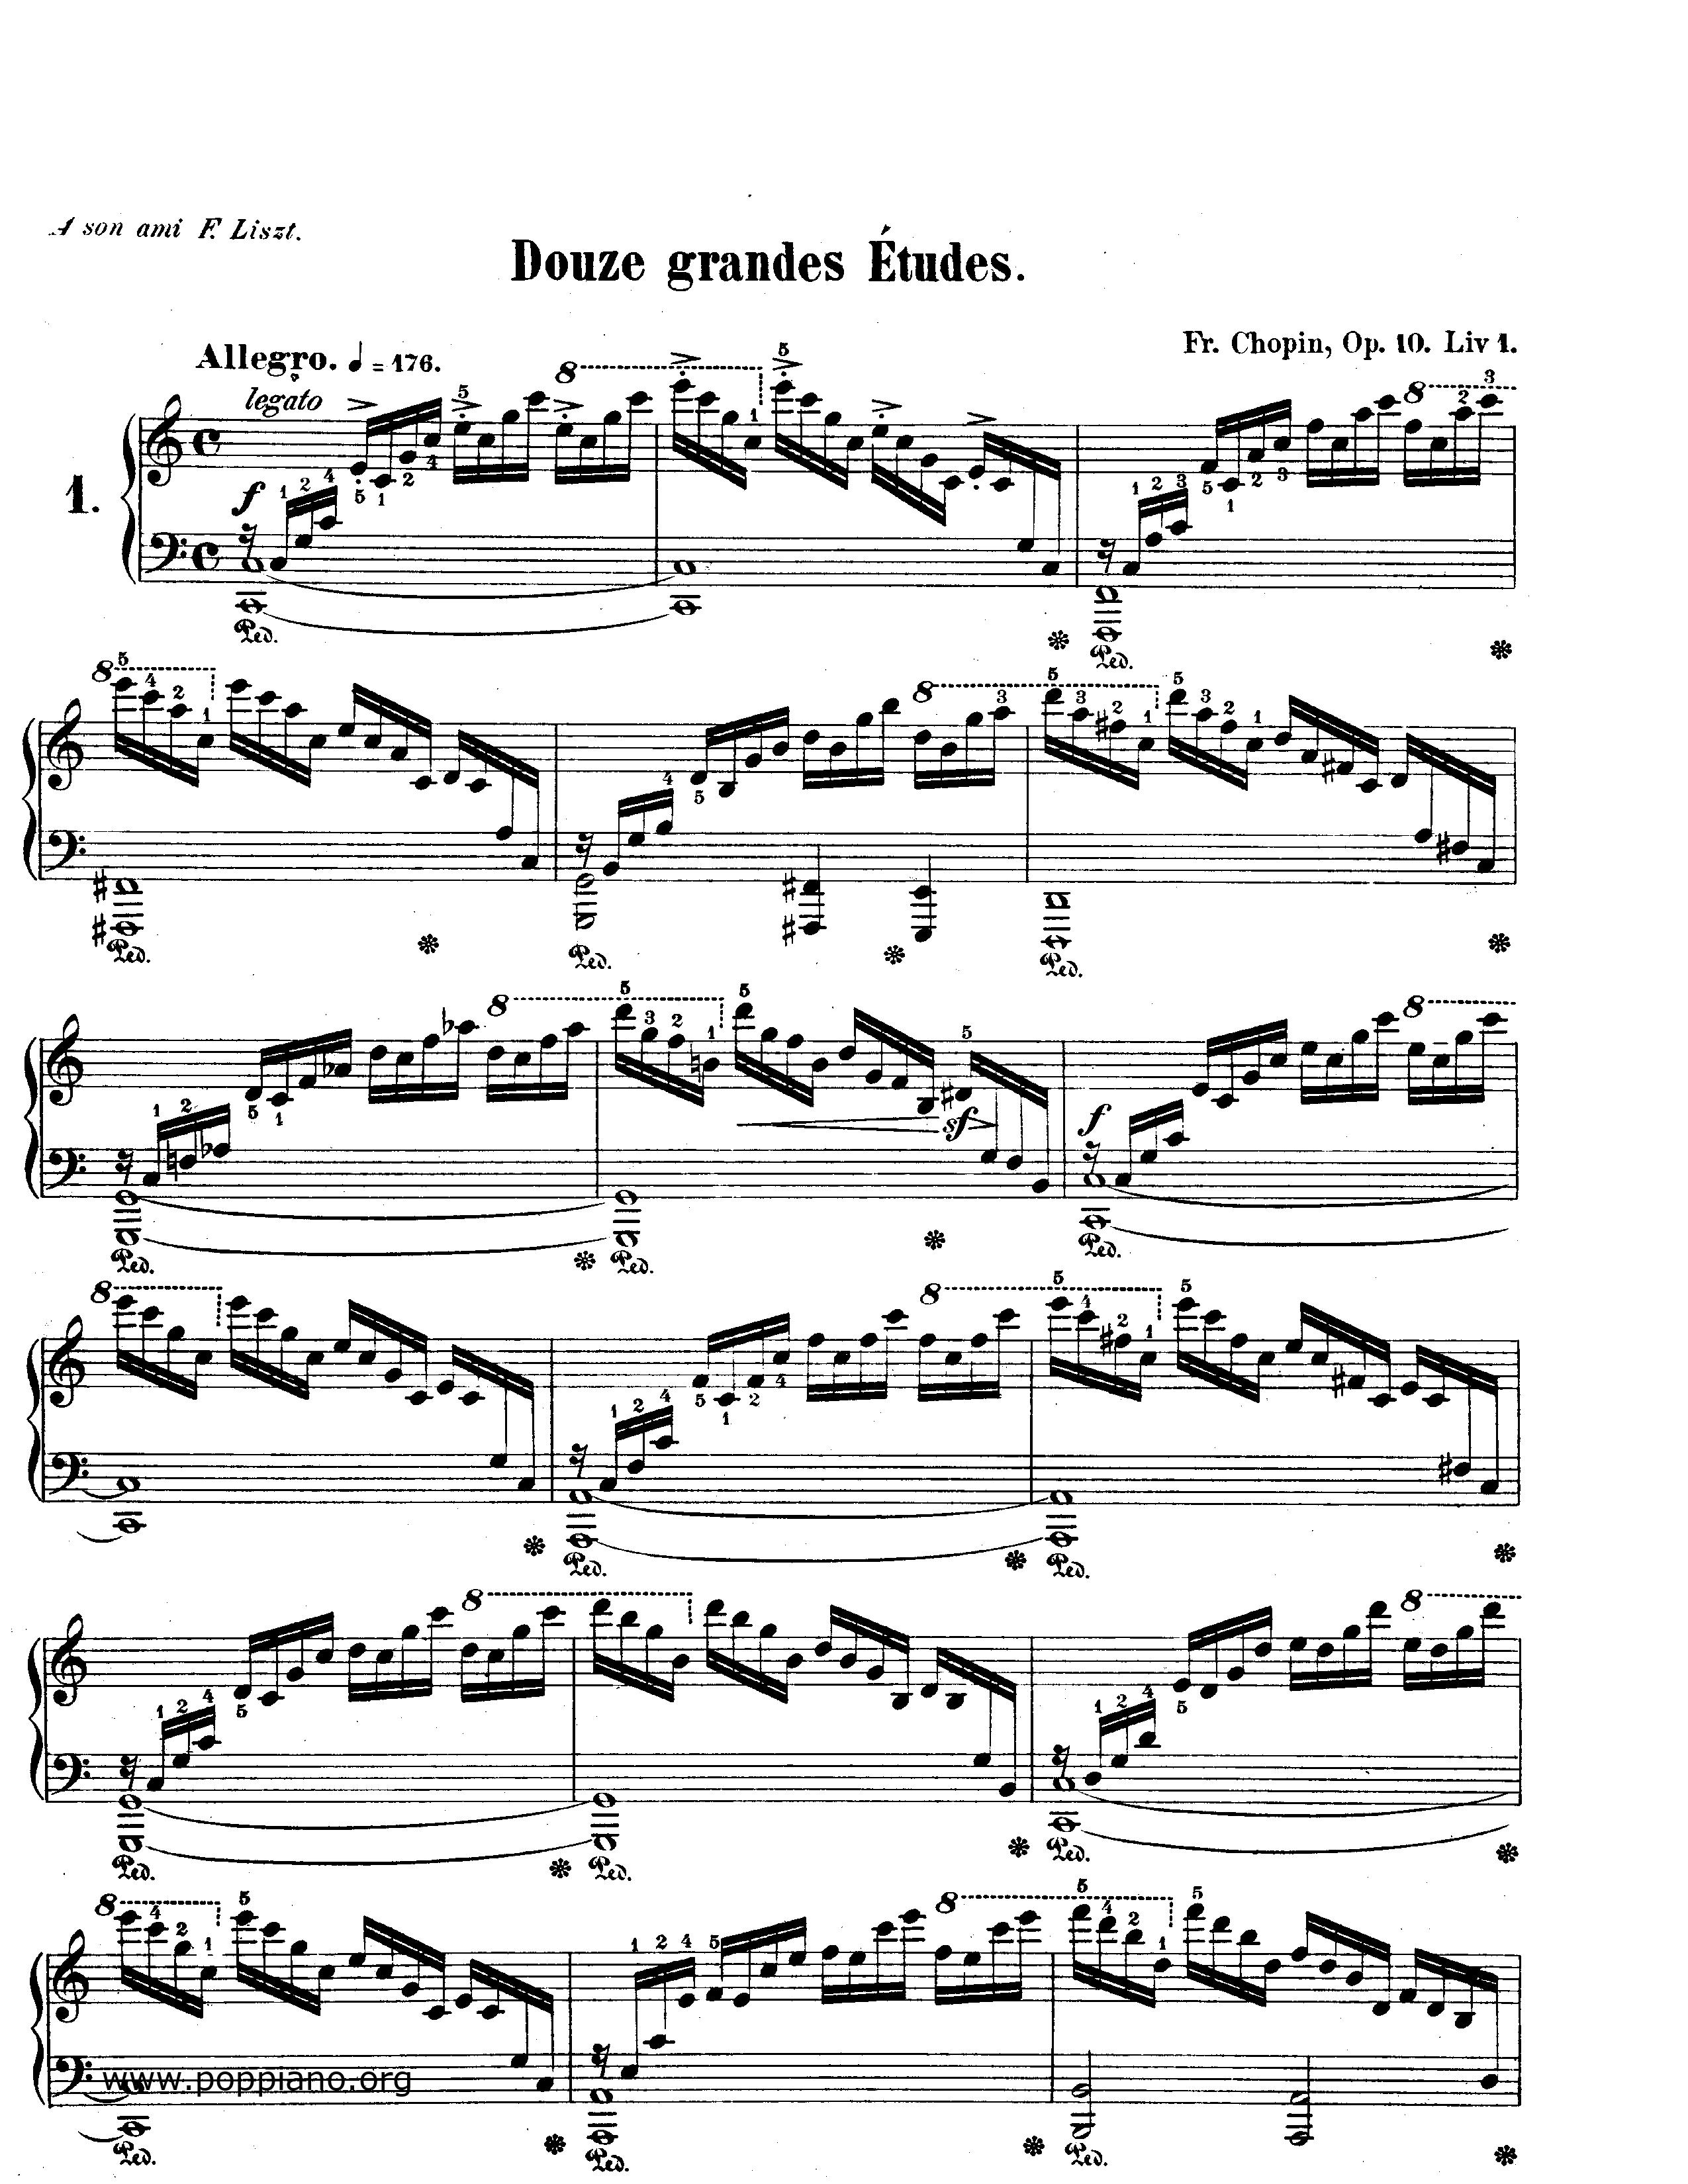 Op. 10, Etude No. 1 Waterfall Score